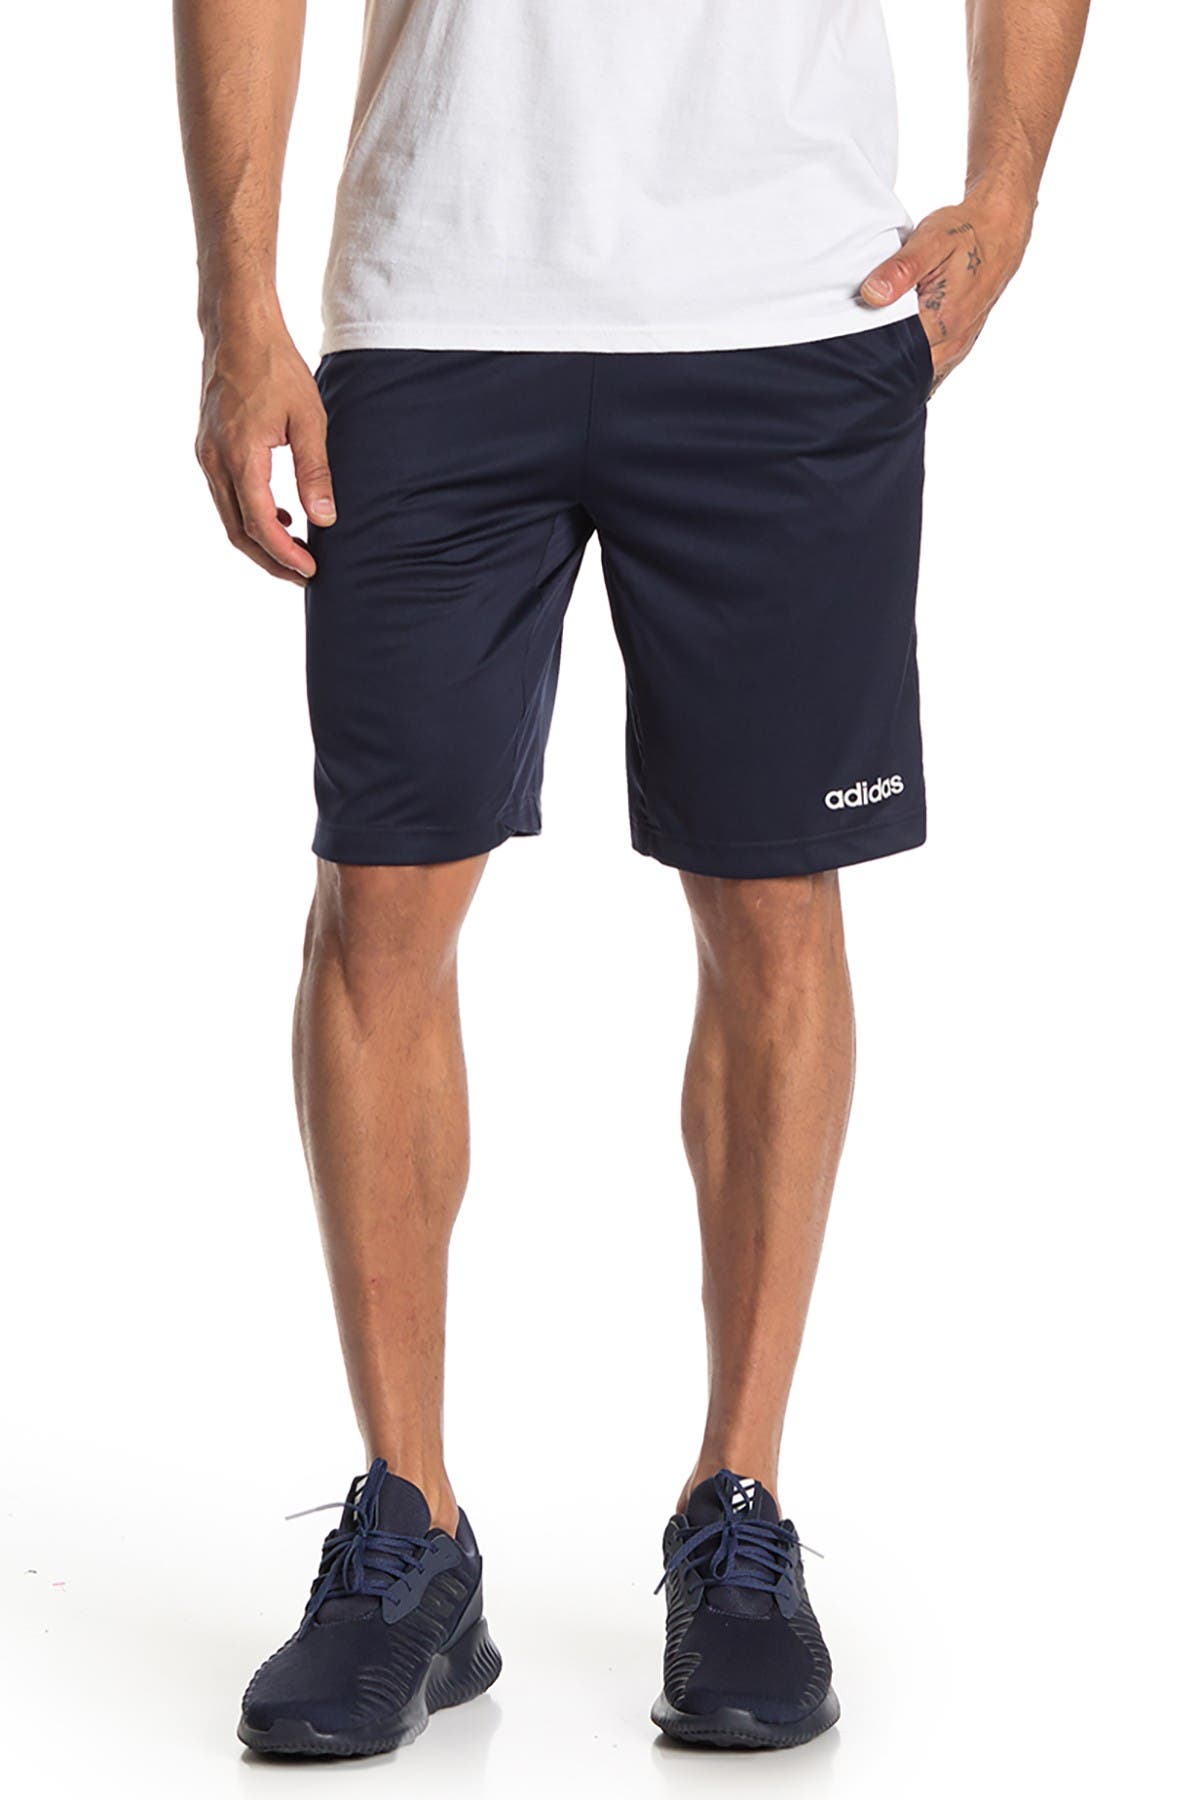 adidas design 2 move climacool shorts